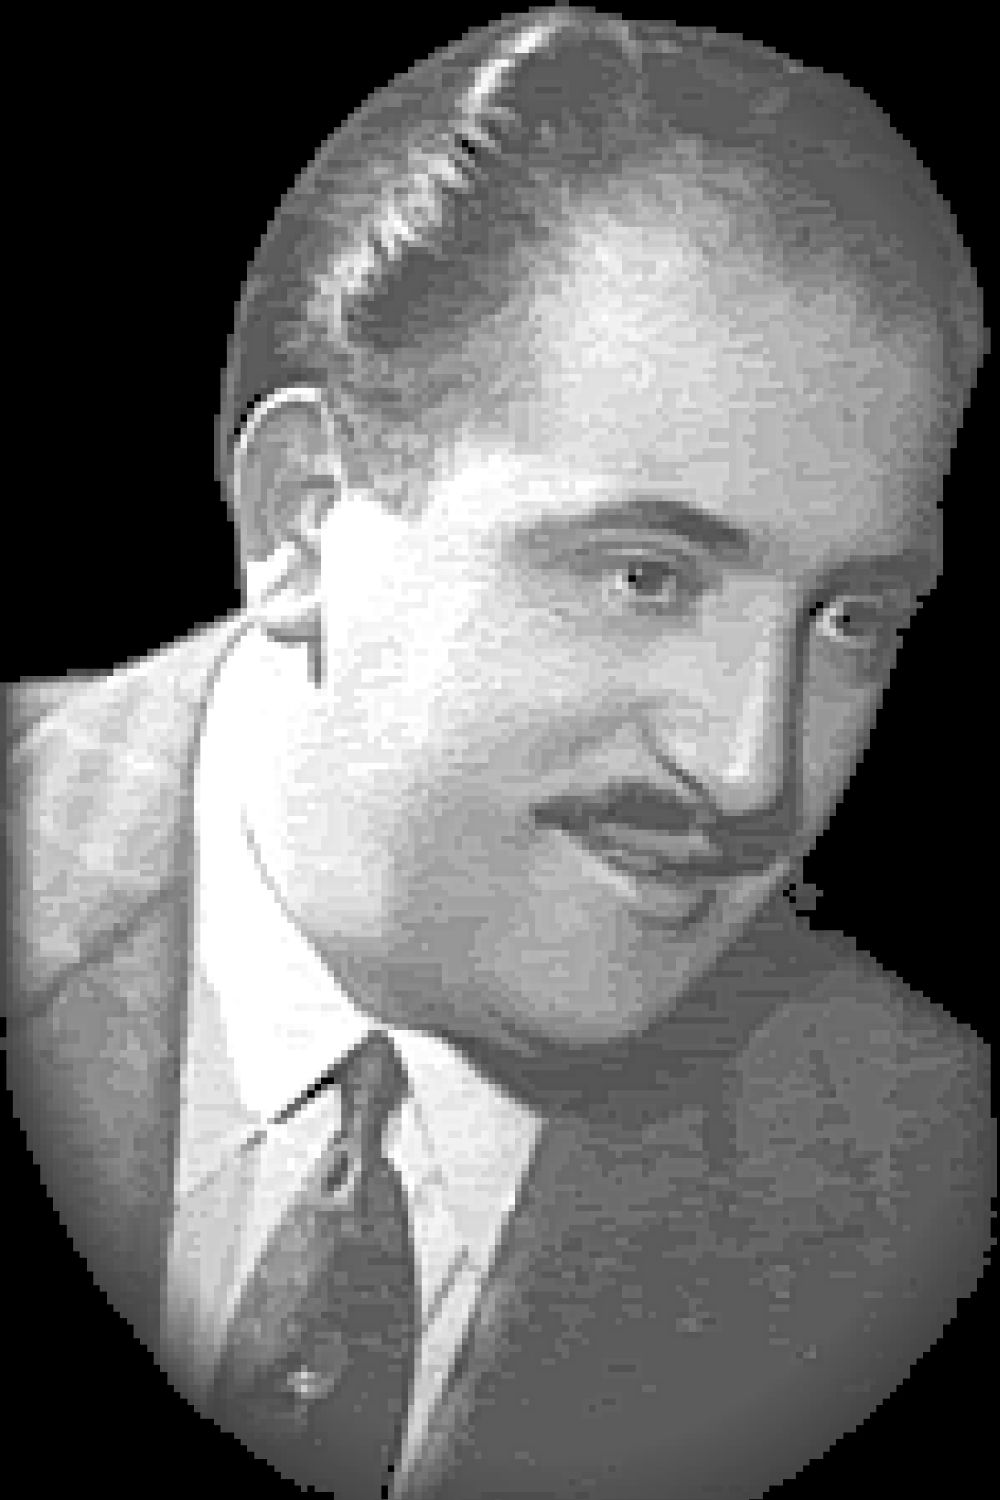 José Rótulo, Argentine Tango lyricist.